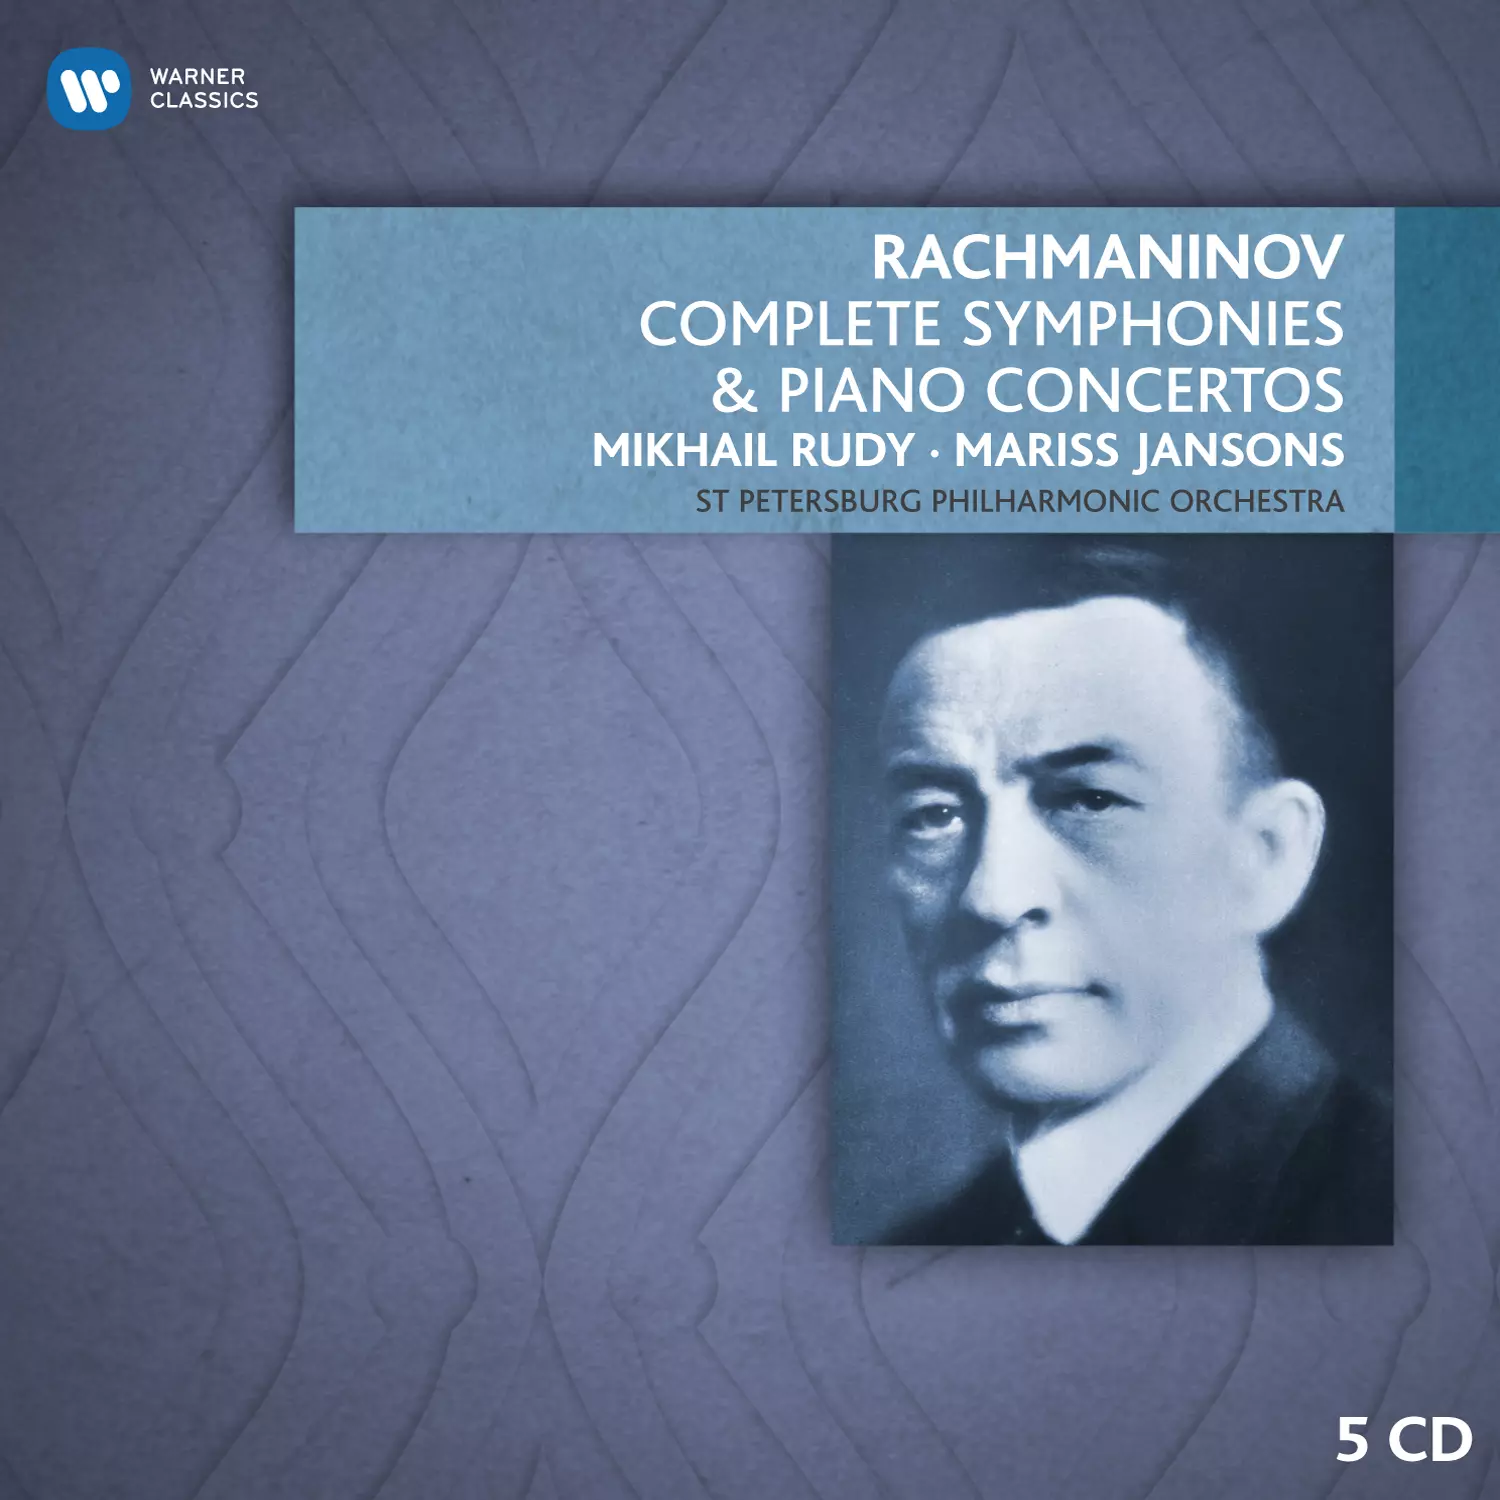 Rachmaninov Orchestral Works (Rudy/Jansons)